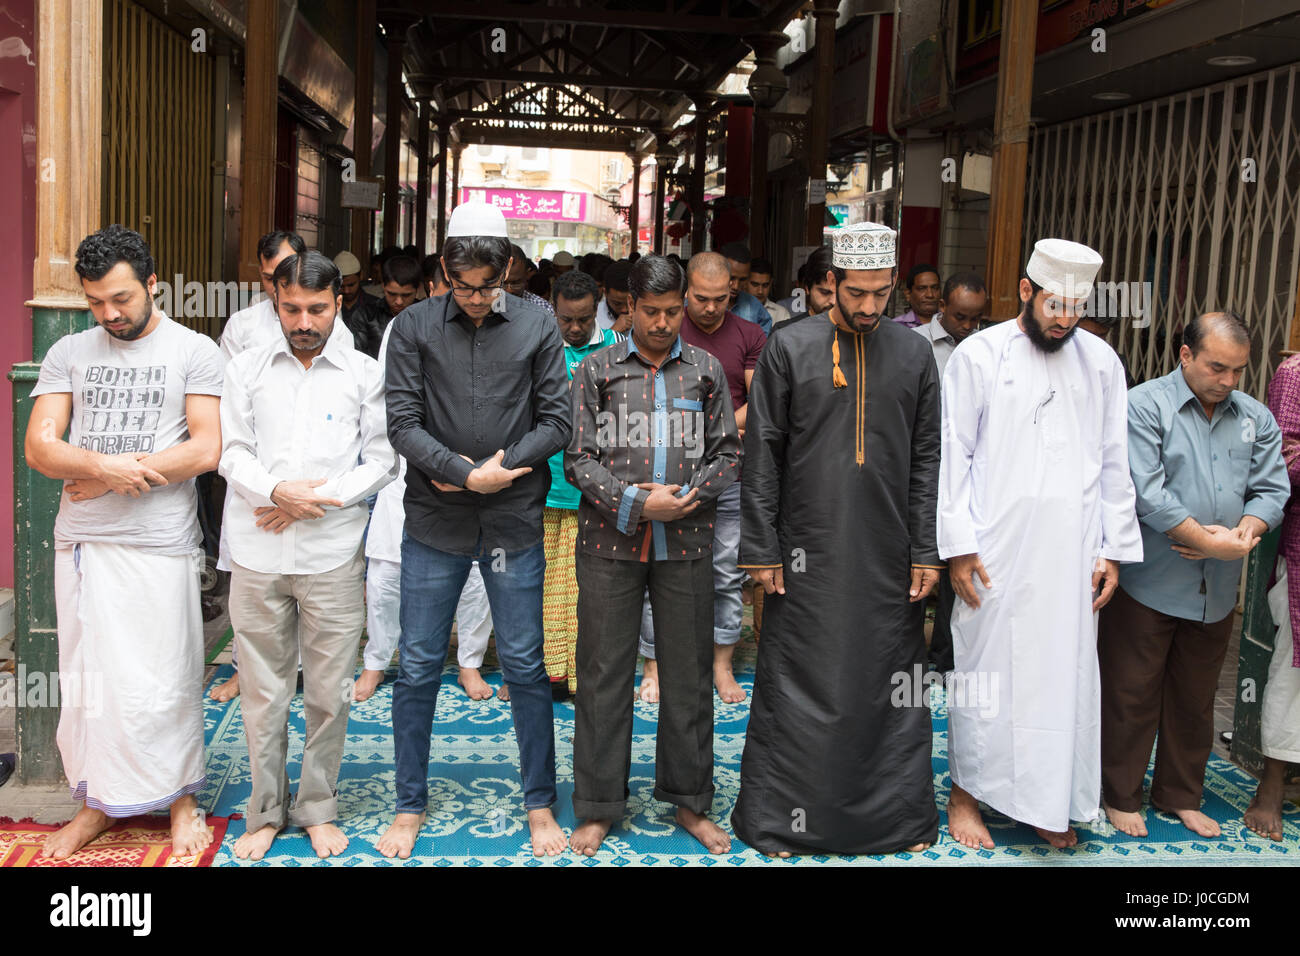 Araber beten am Freitag Gebetszeit. Stockfoto